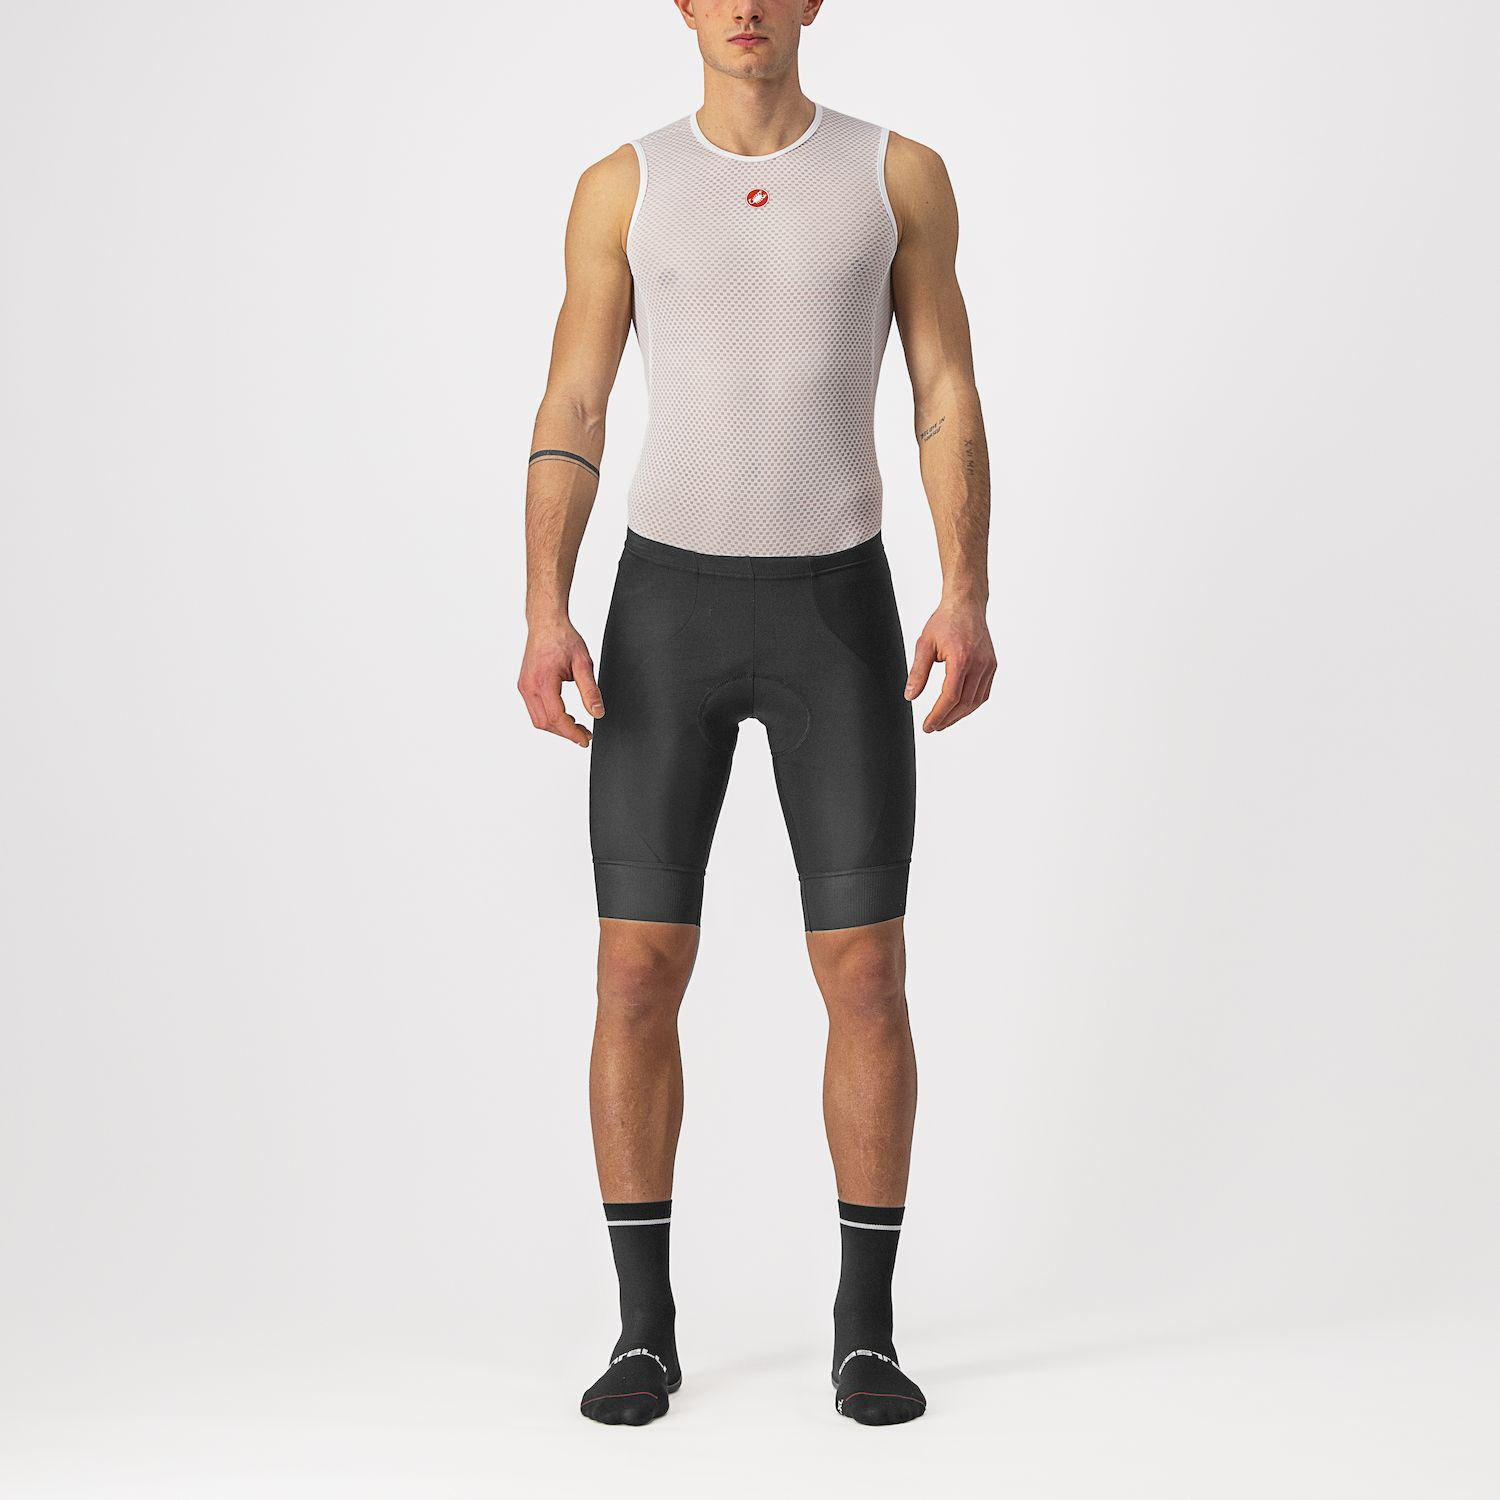 Castelli Entrata - Cycling shorts - Men's